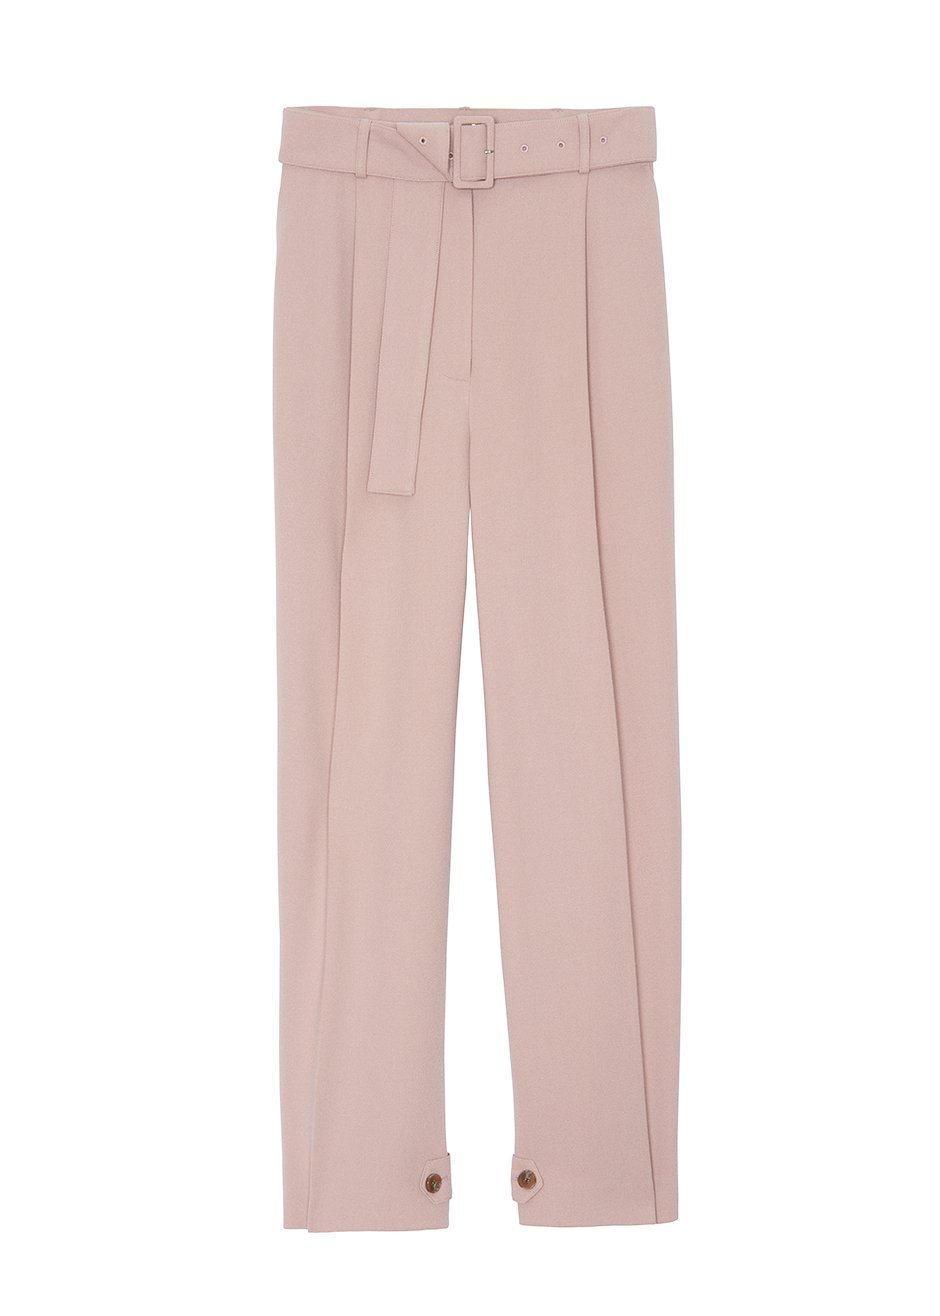 Elvira Belted Suit Pants - Pink - 9